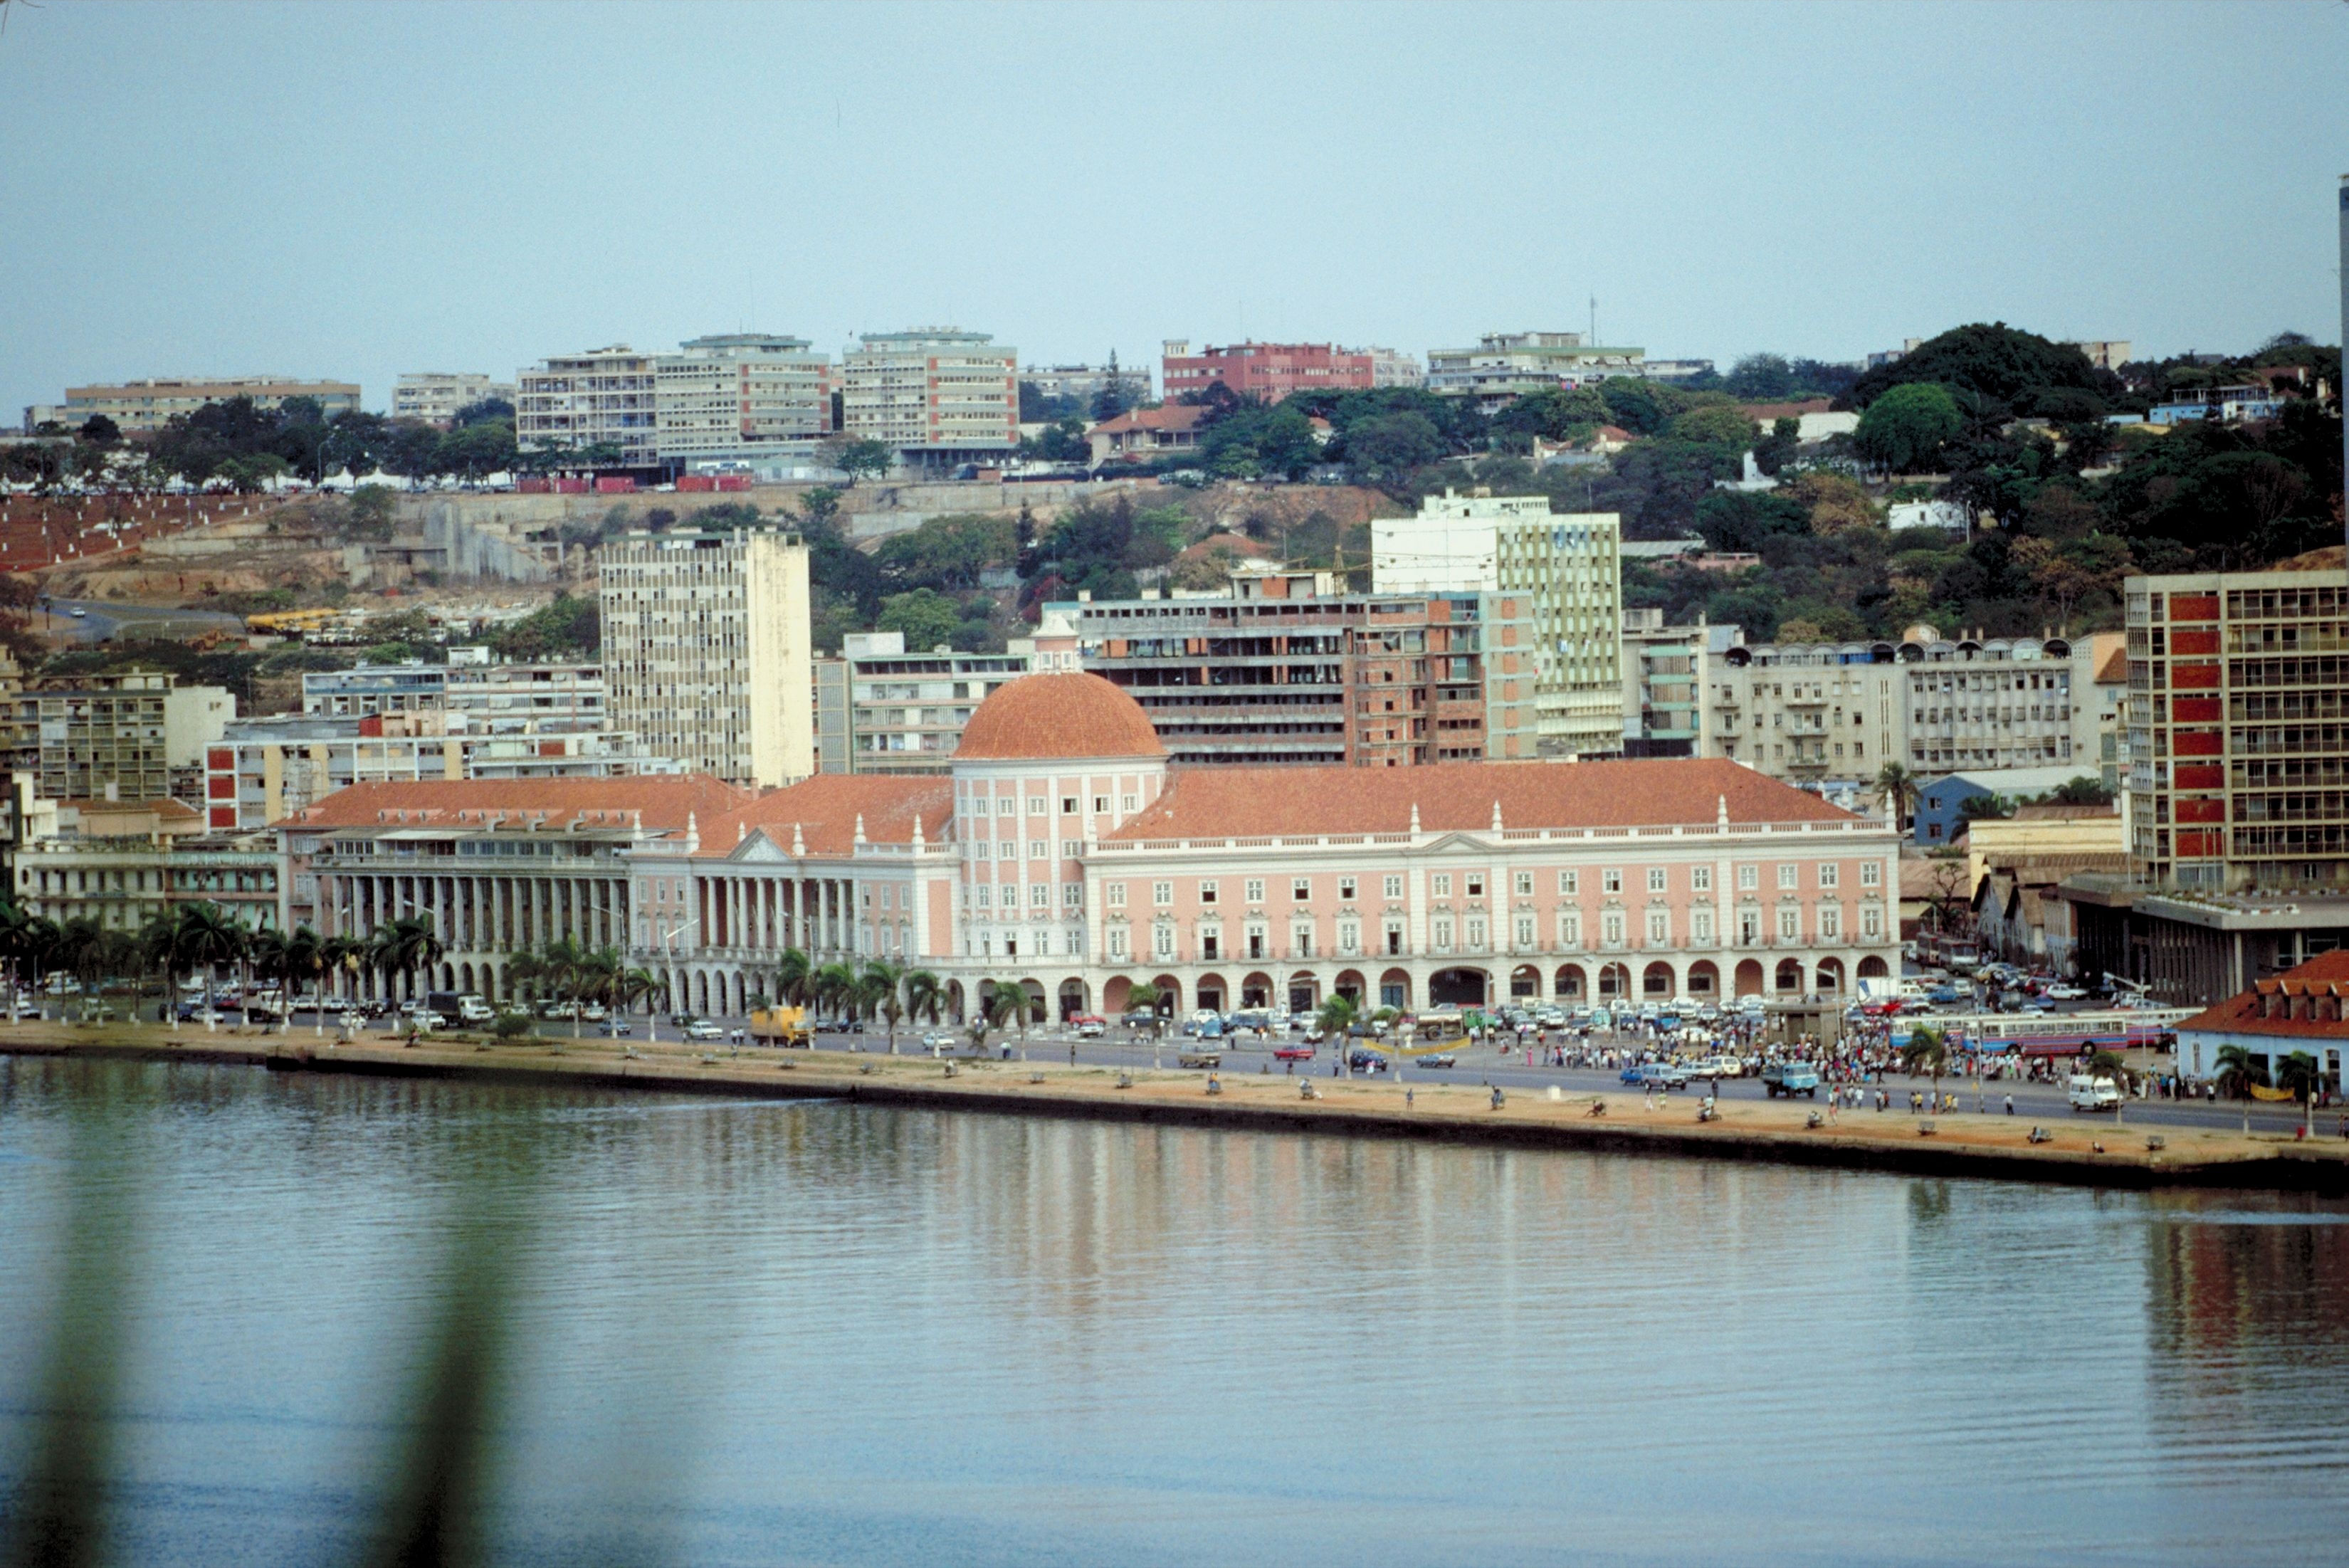 Angolan capital Luanda